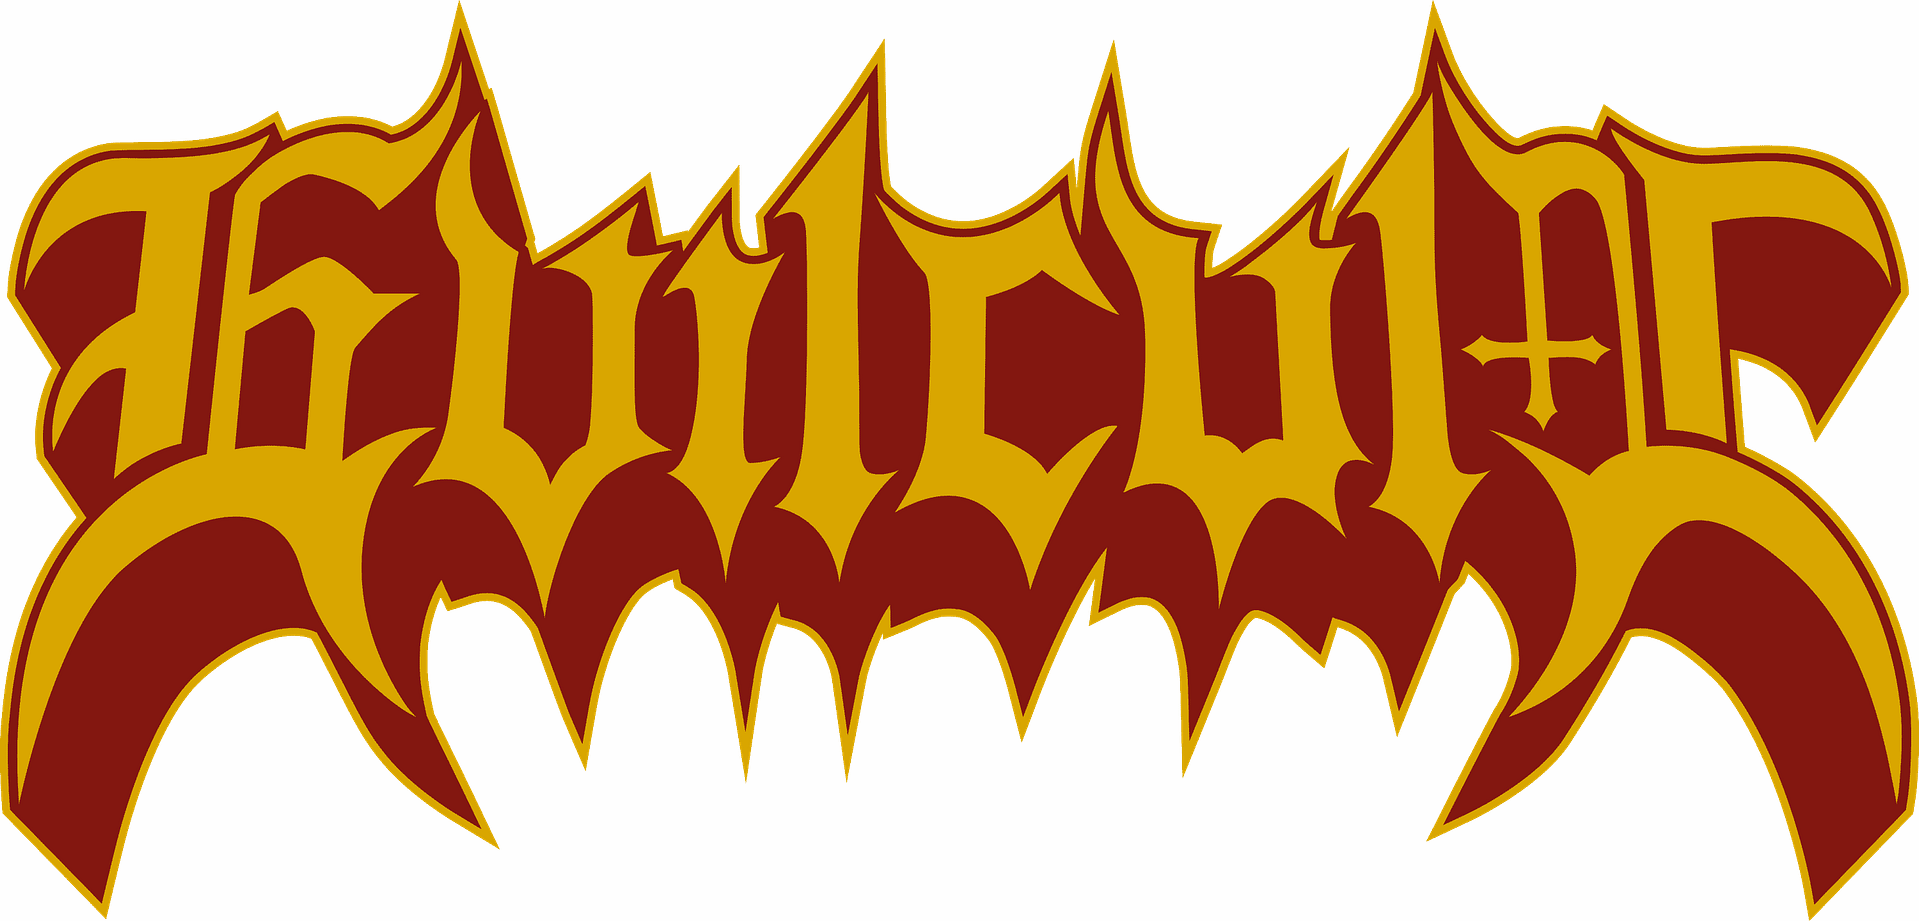 Evilcult's logo